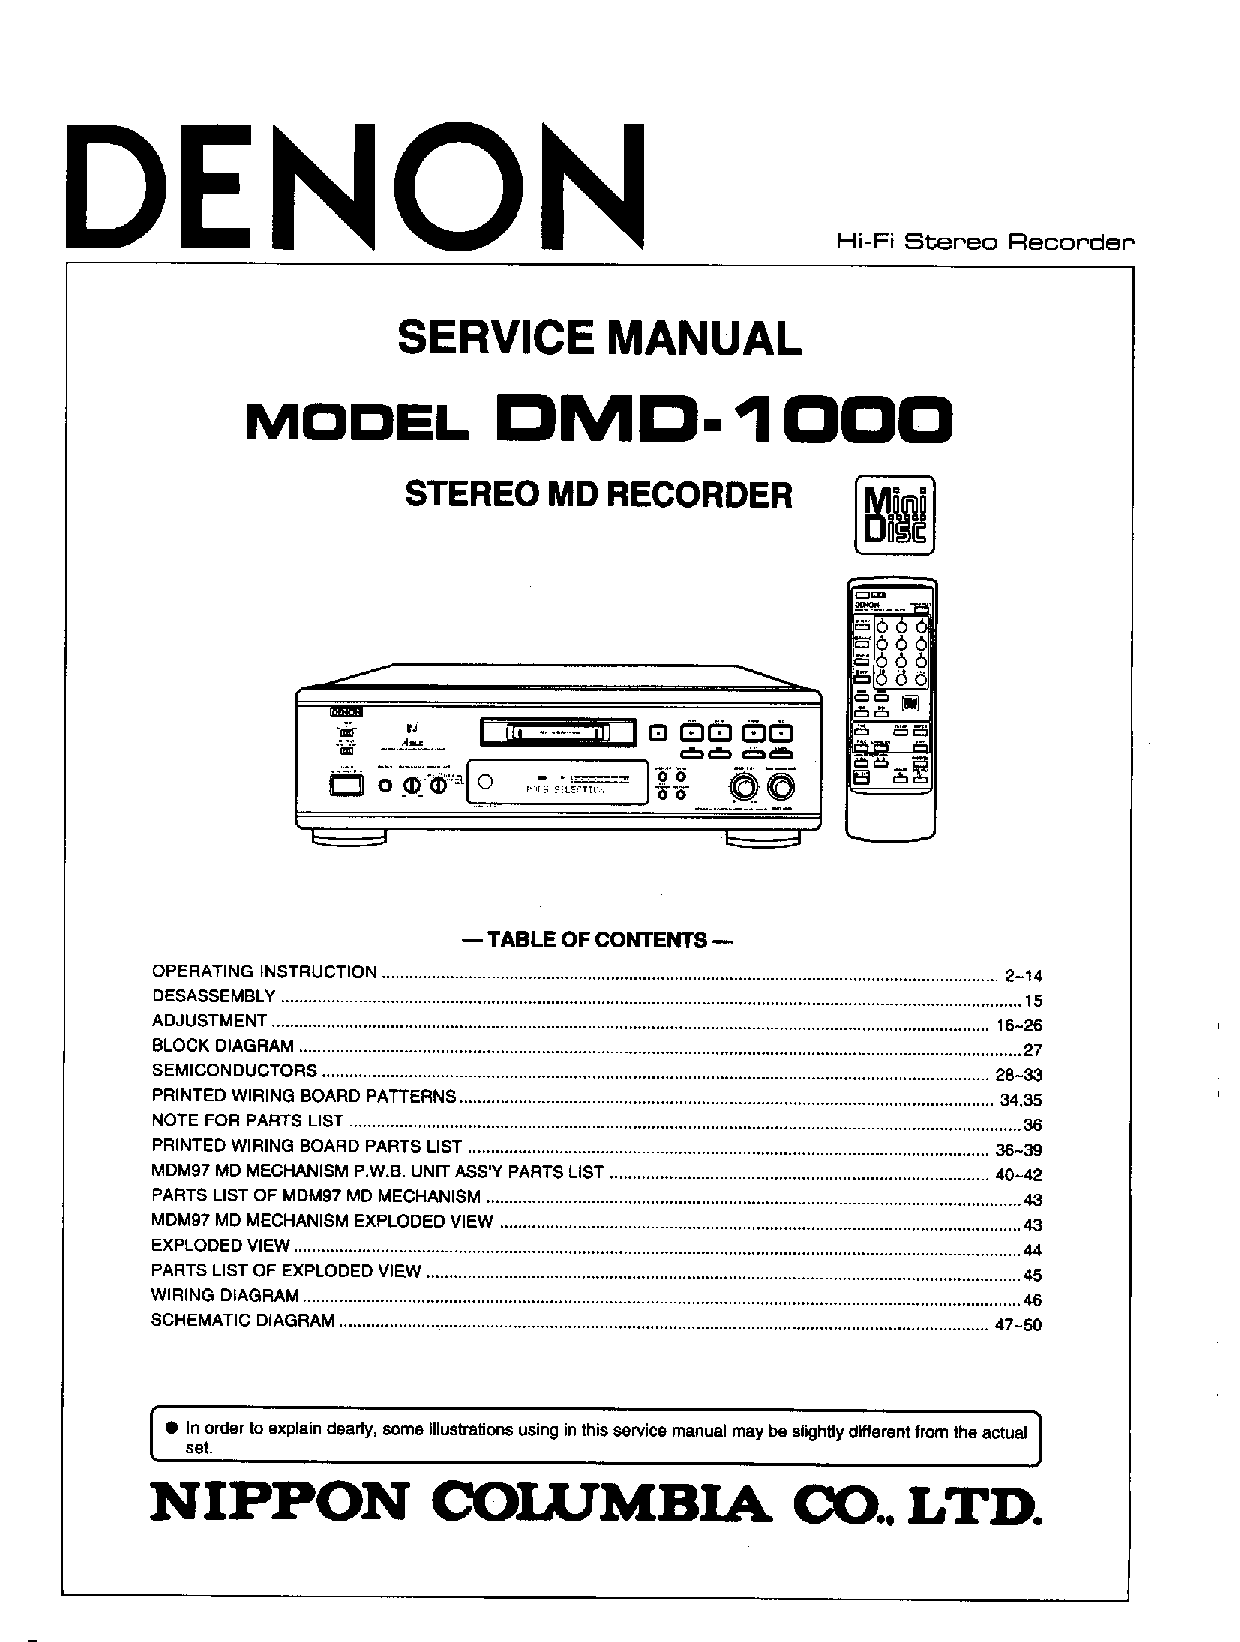 Denon DMD-1000 Service Manual